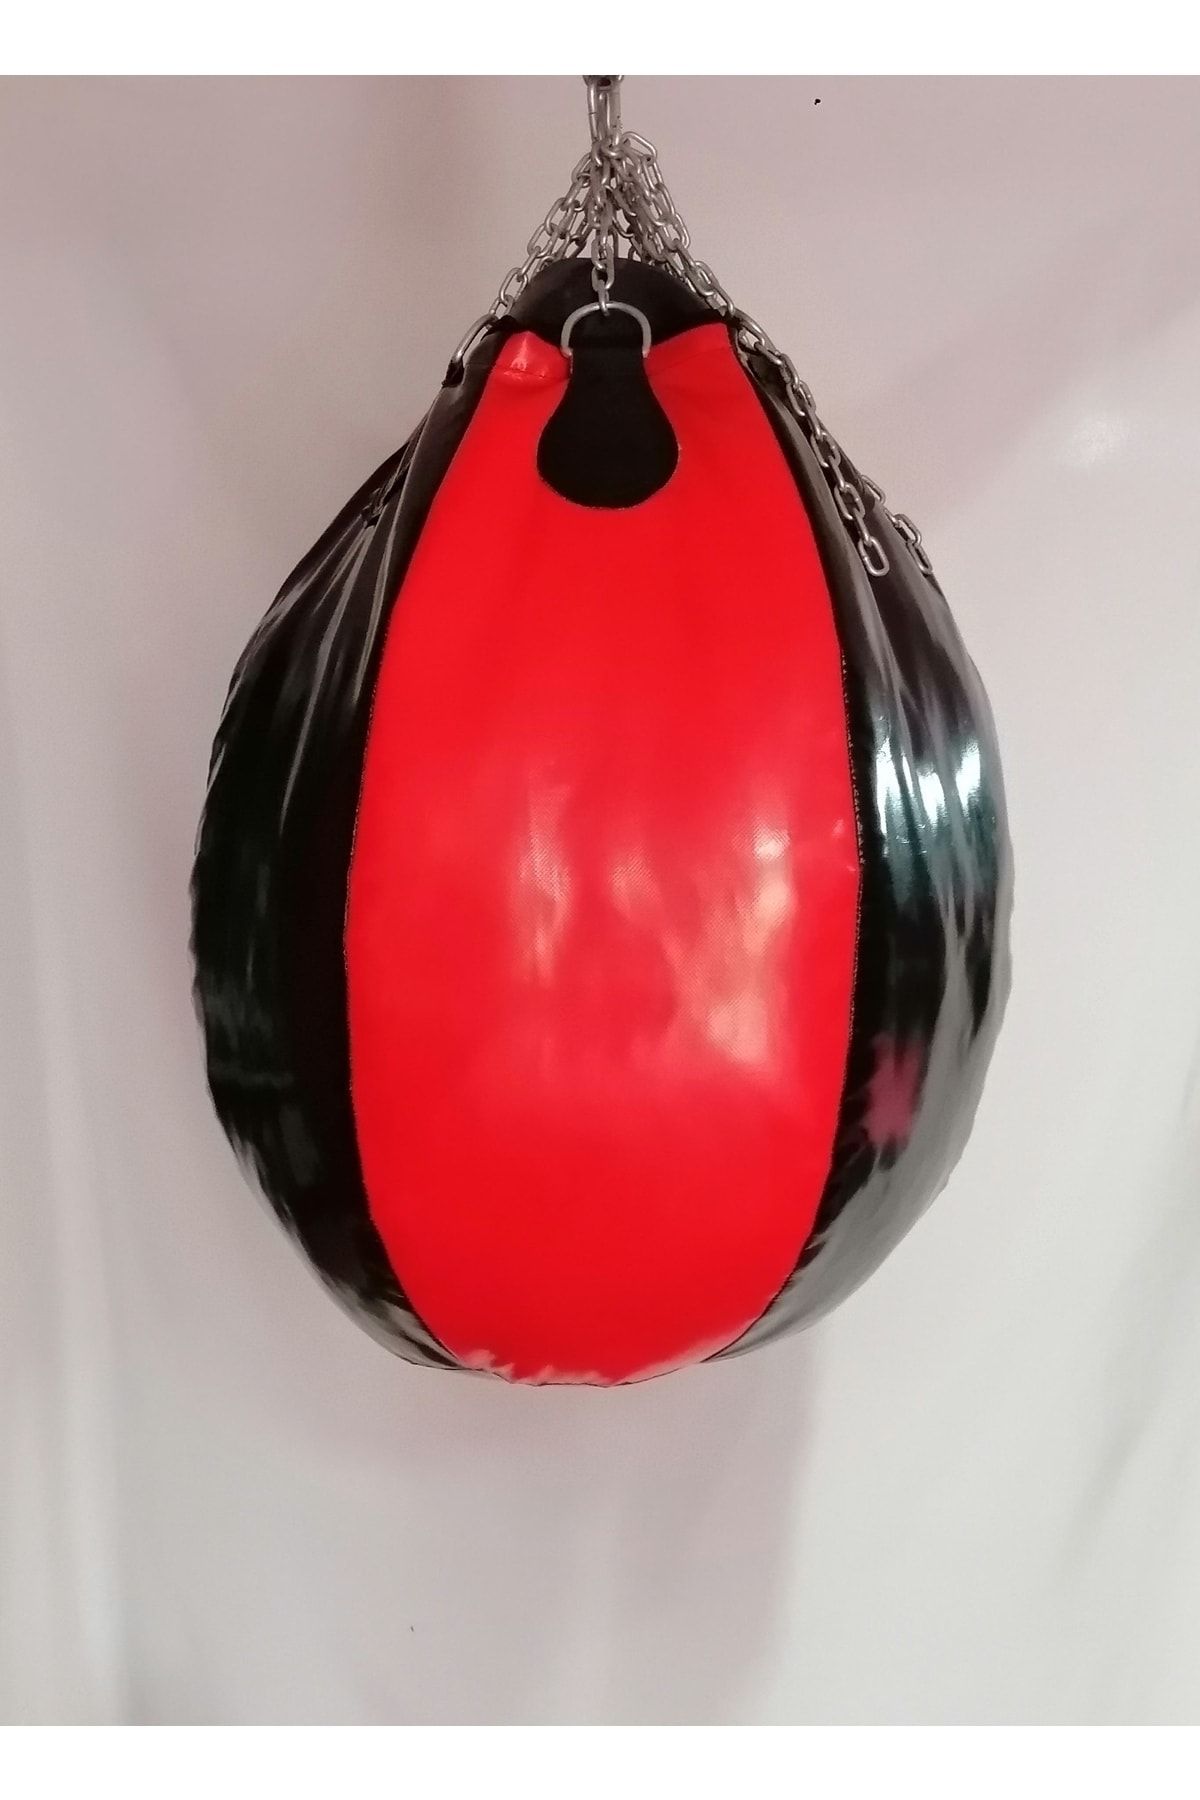 PİTBULL Küre Model Salon Tipi Kum Torbası Kırmızı Siyah Renk